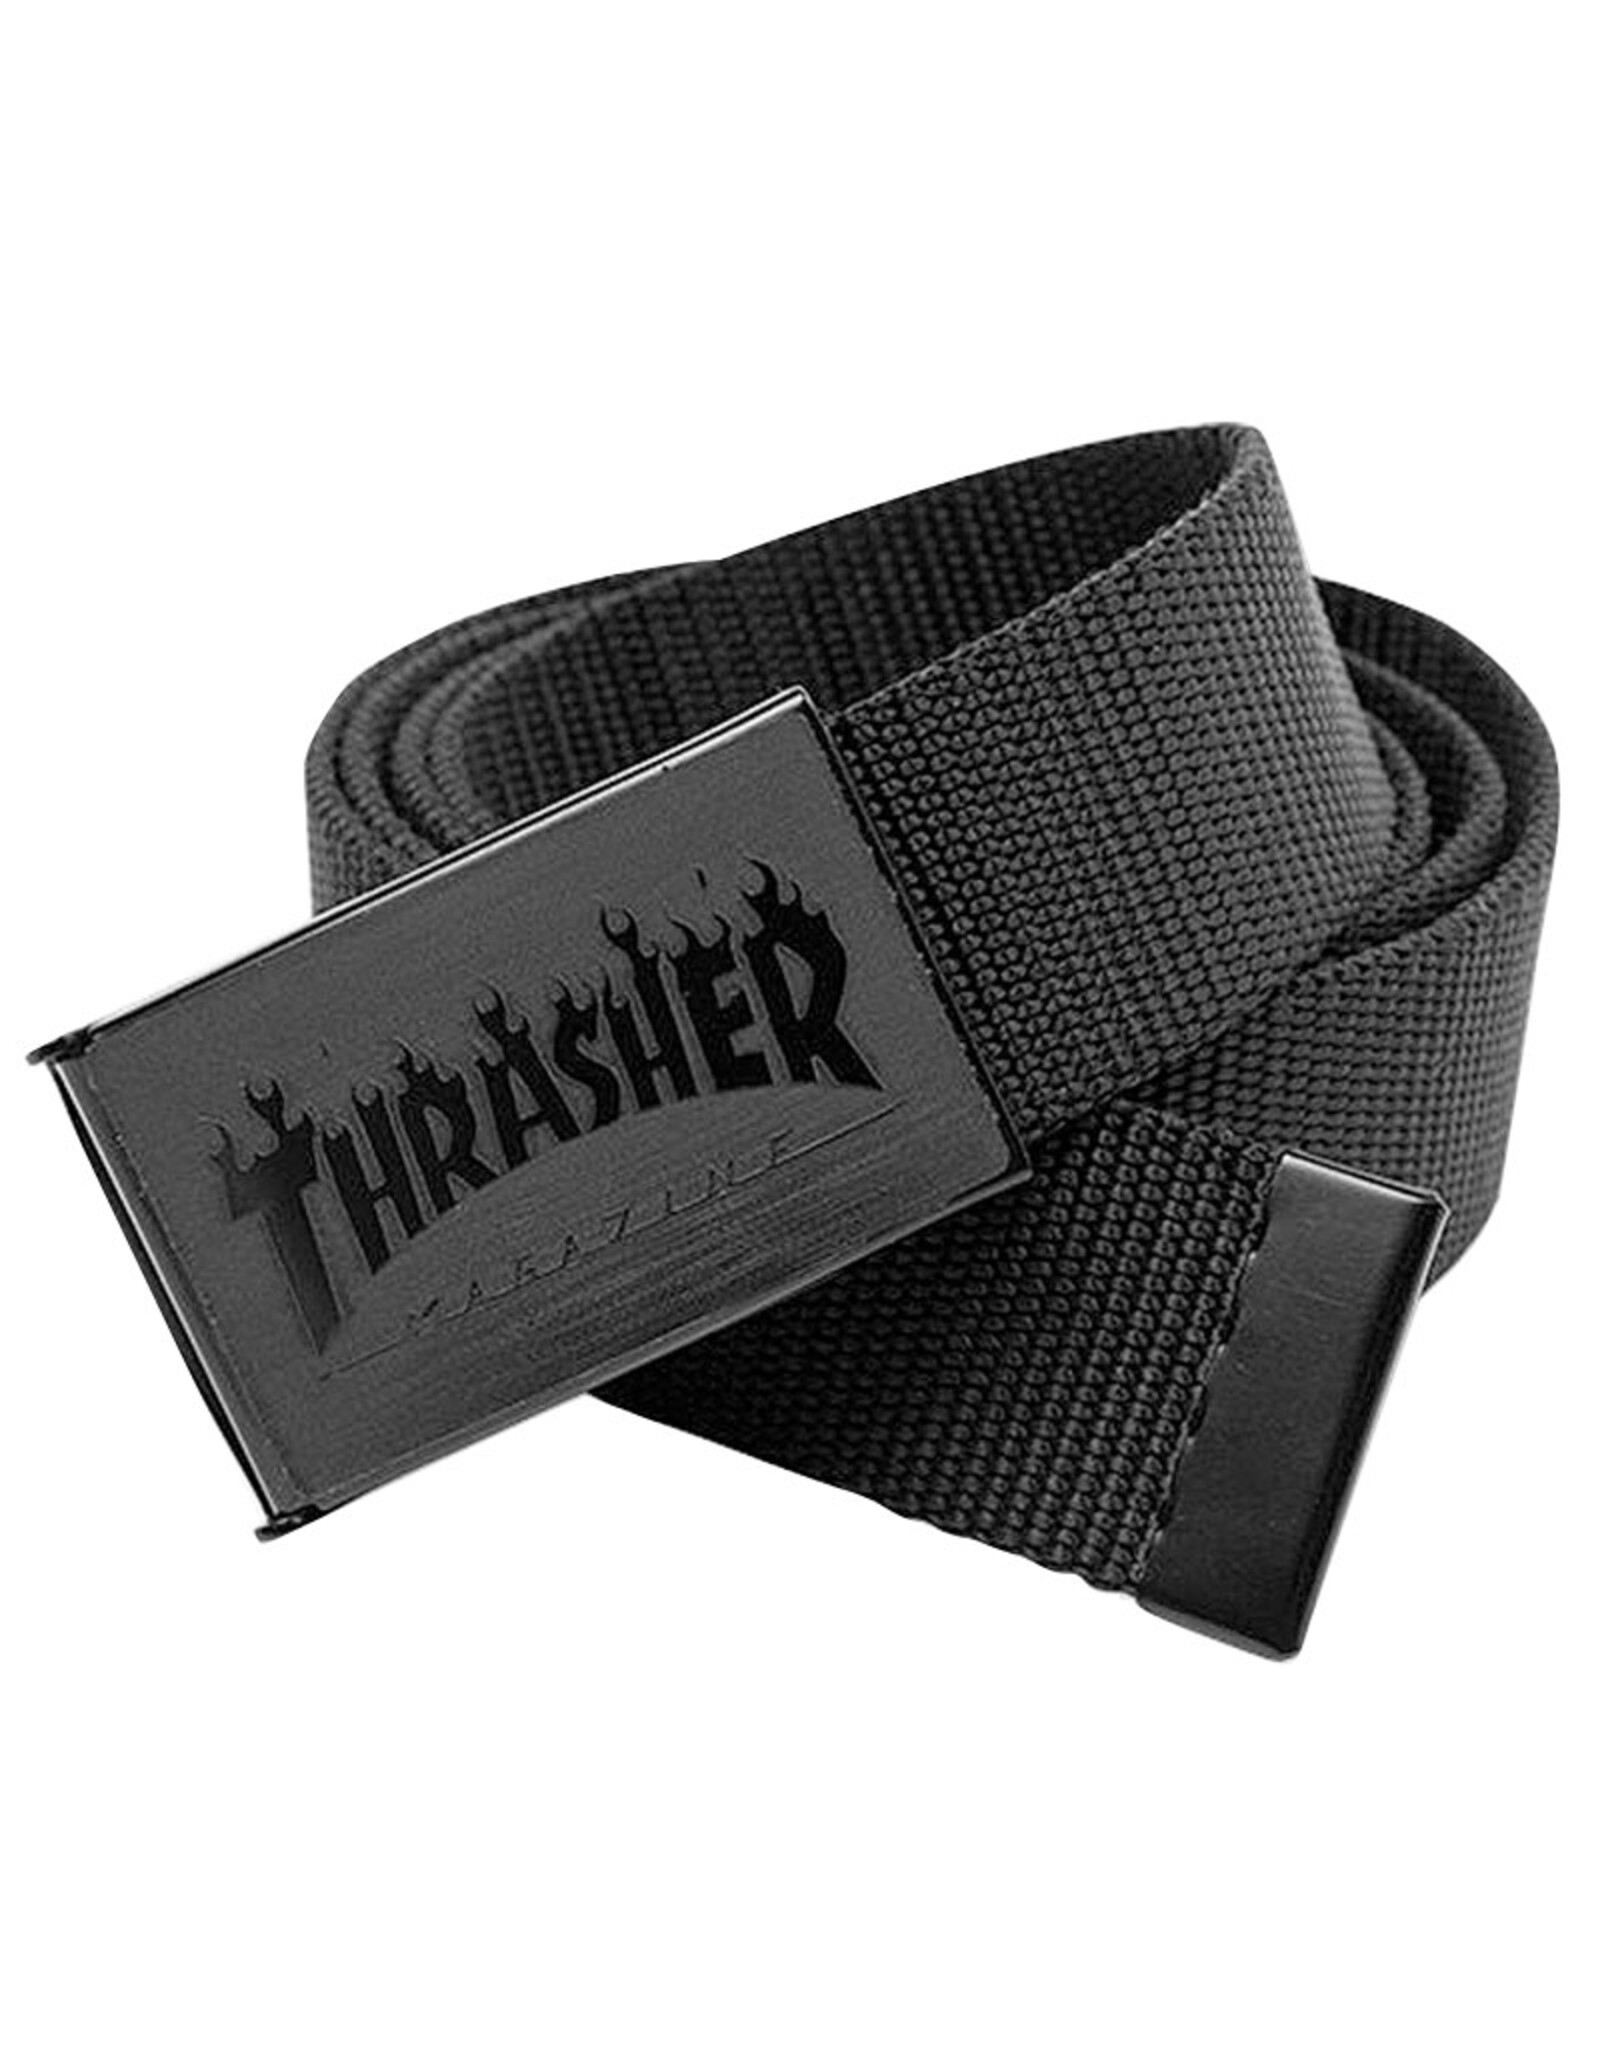 Thrasher Thrasher Belt Flame Web (Black)